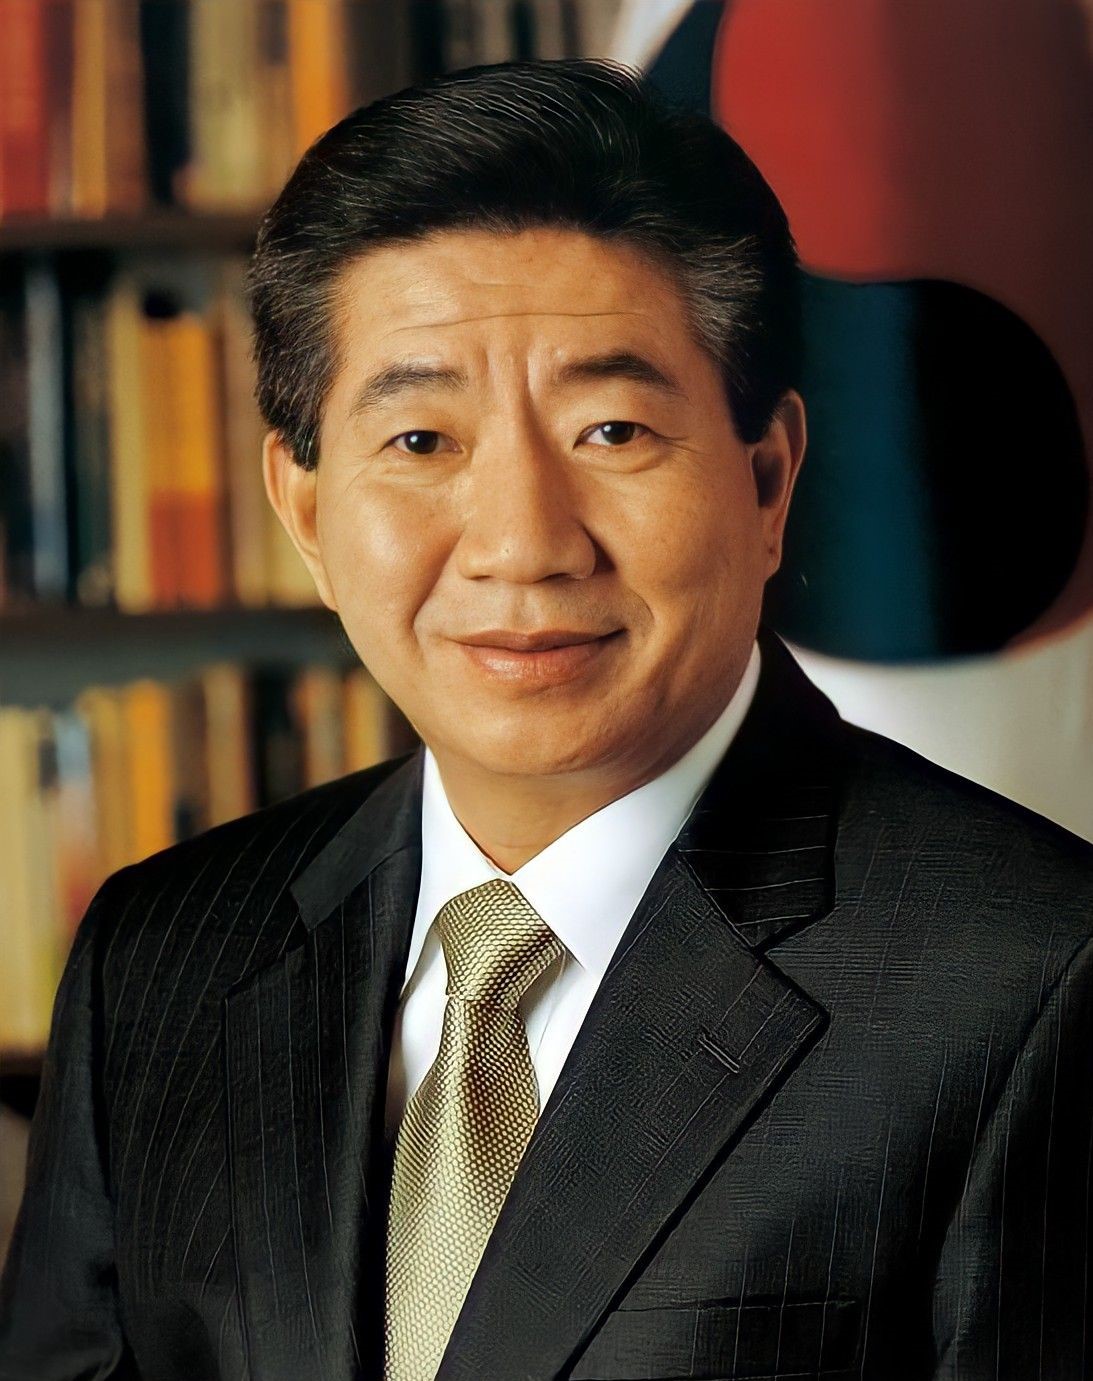 Roh_Moo-hyun_presidential_portrait.jpg